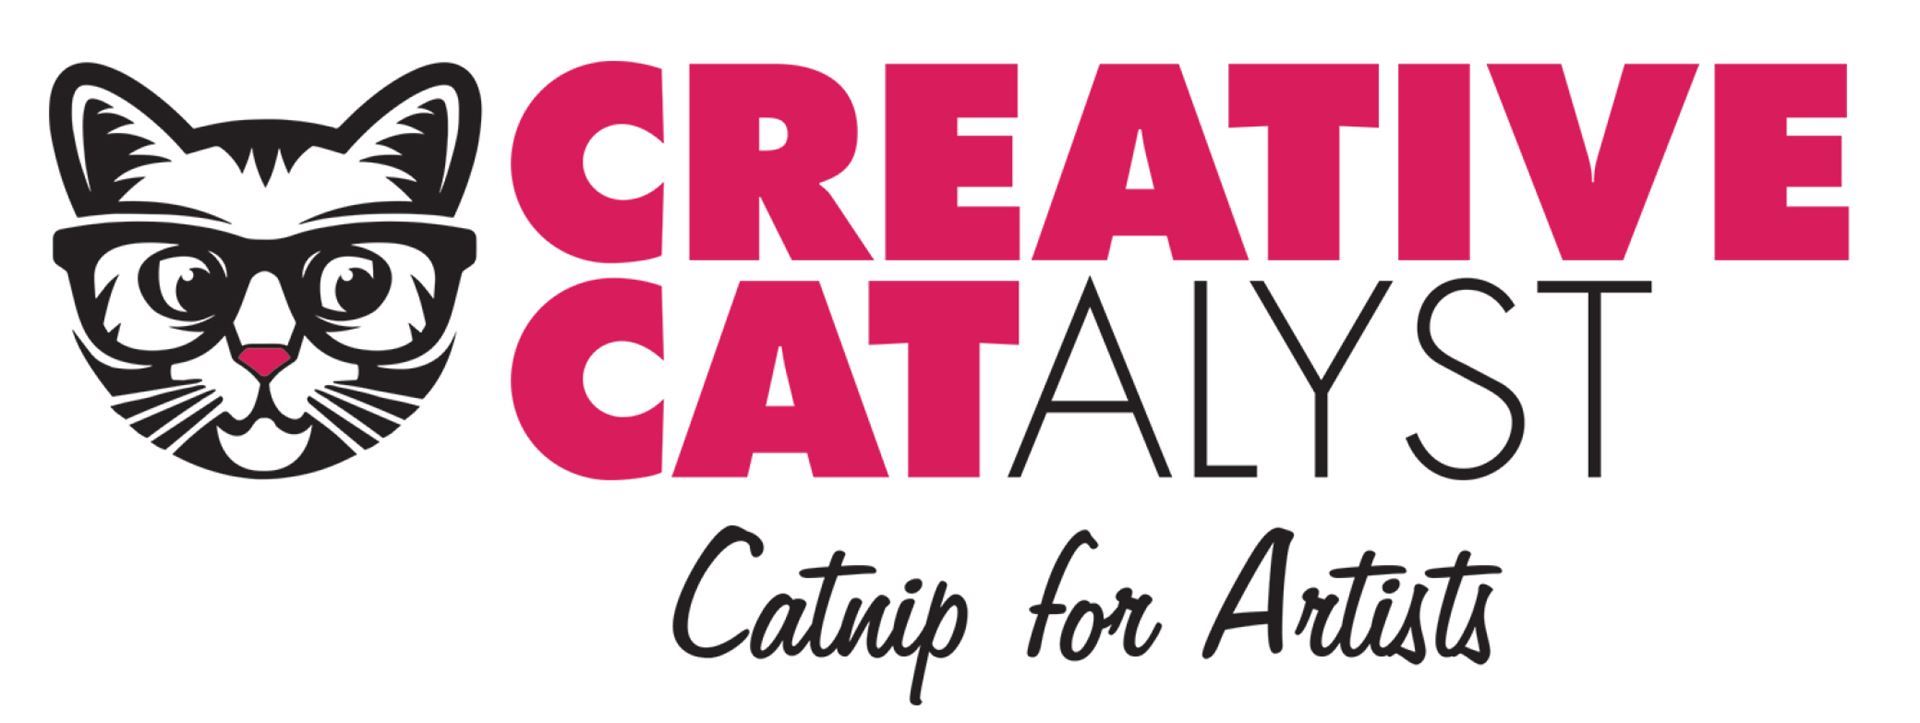 Creative Catalyst logo, "Catnip for Artists"